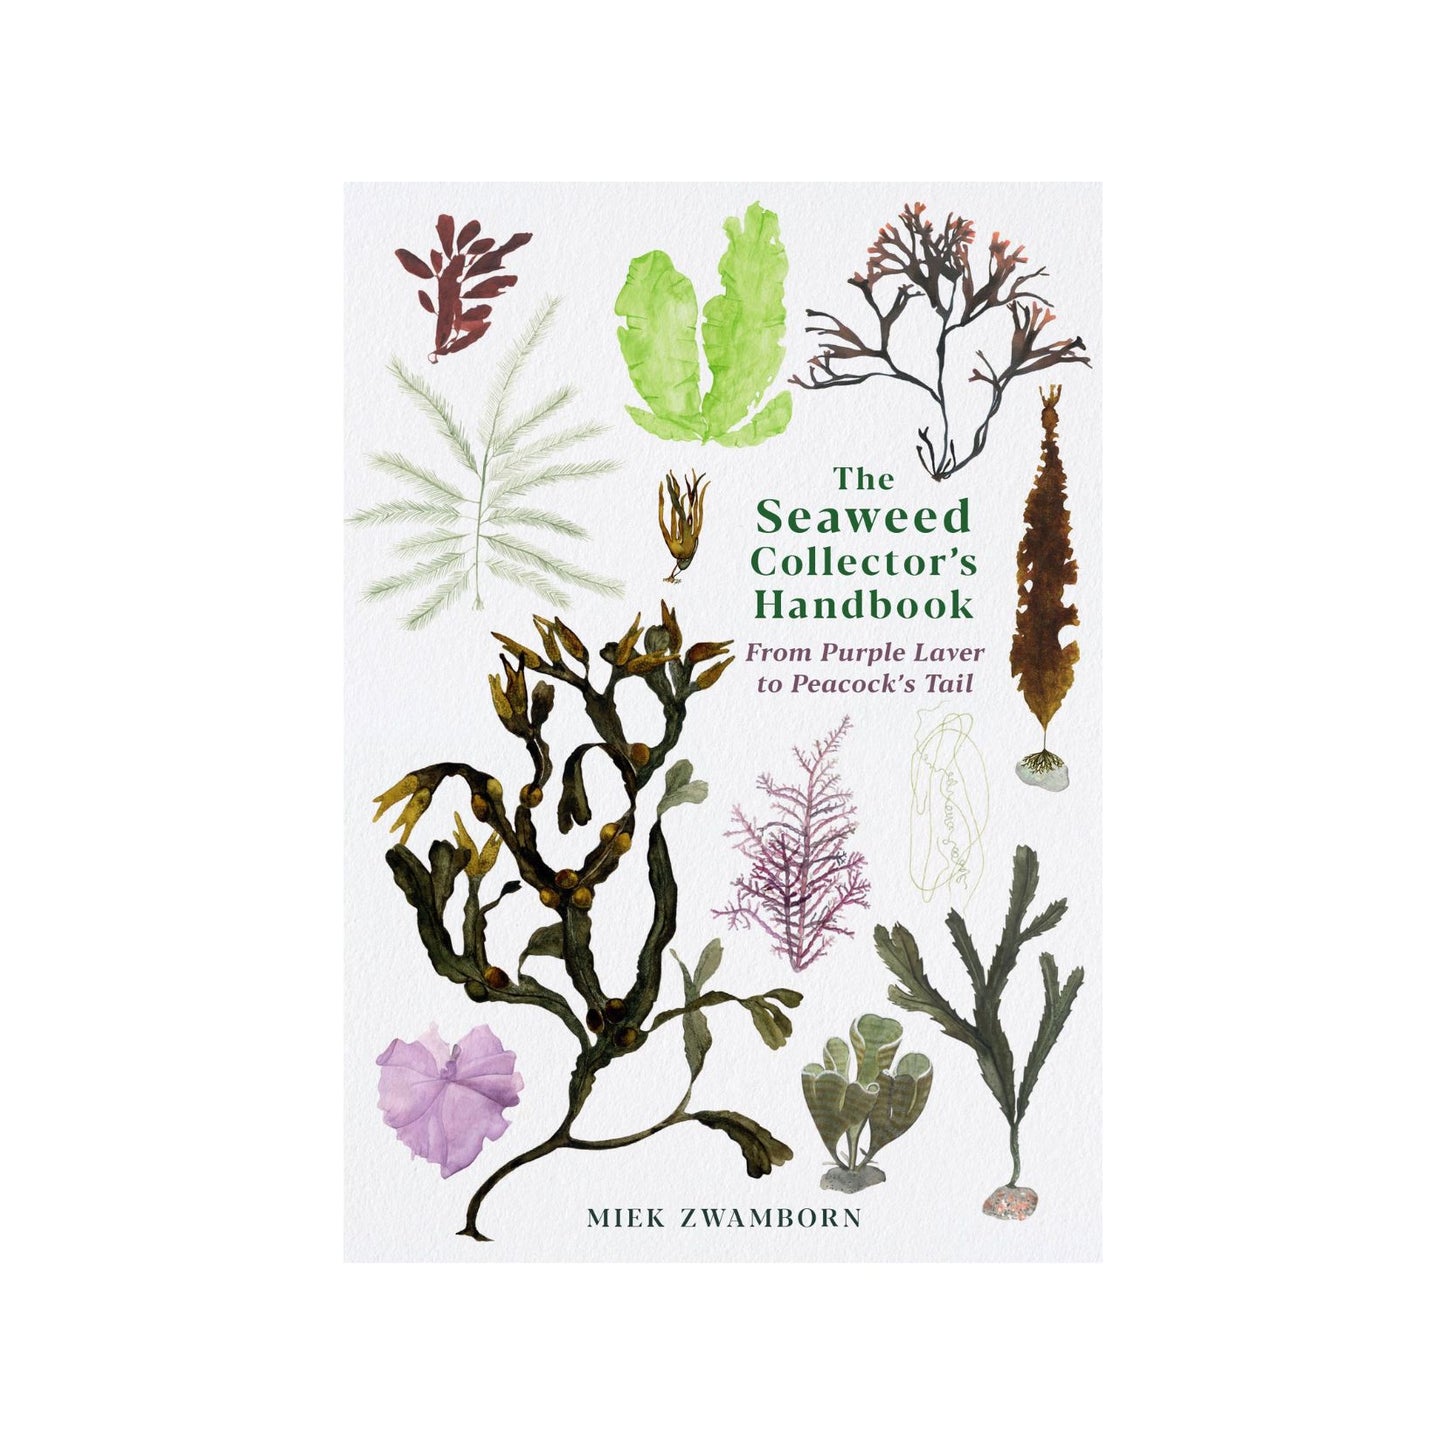 Seaweed Collectors Handbook by Miek Zwamborn